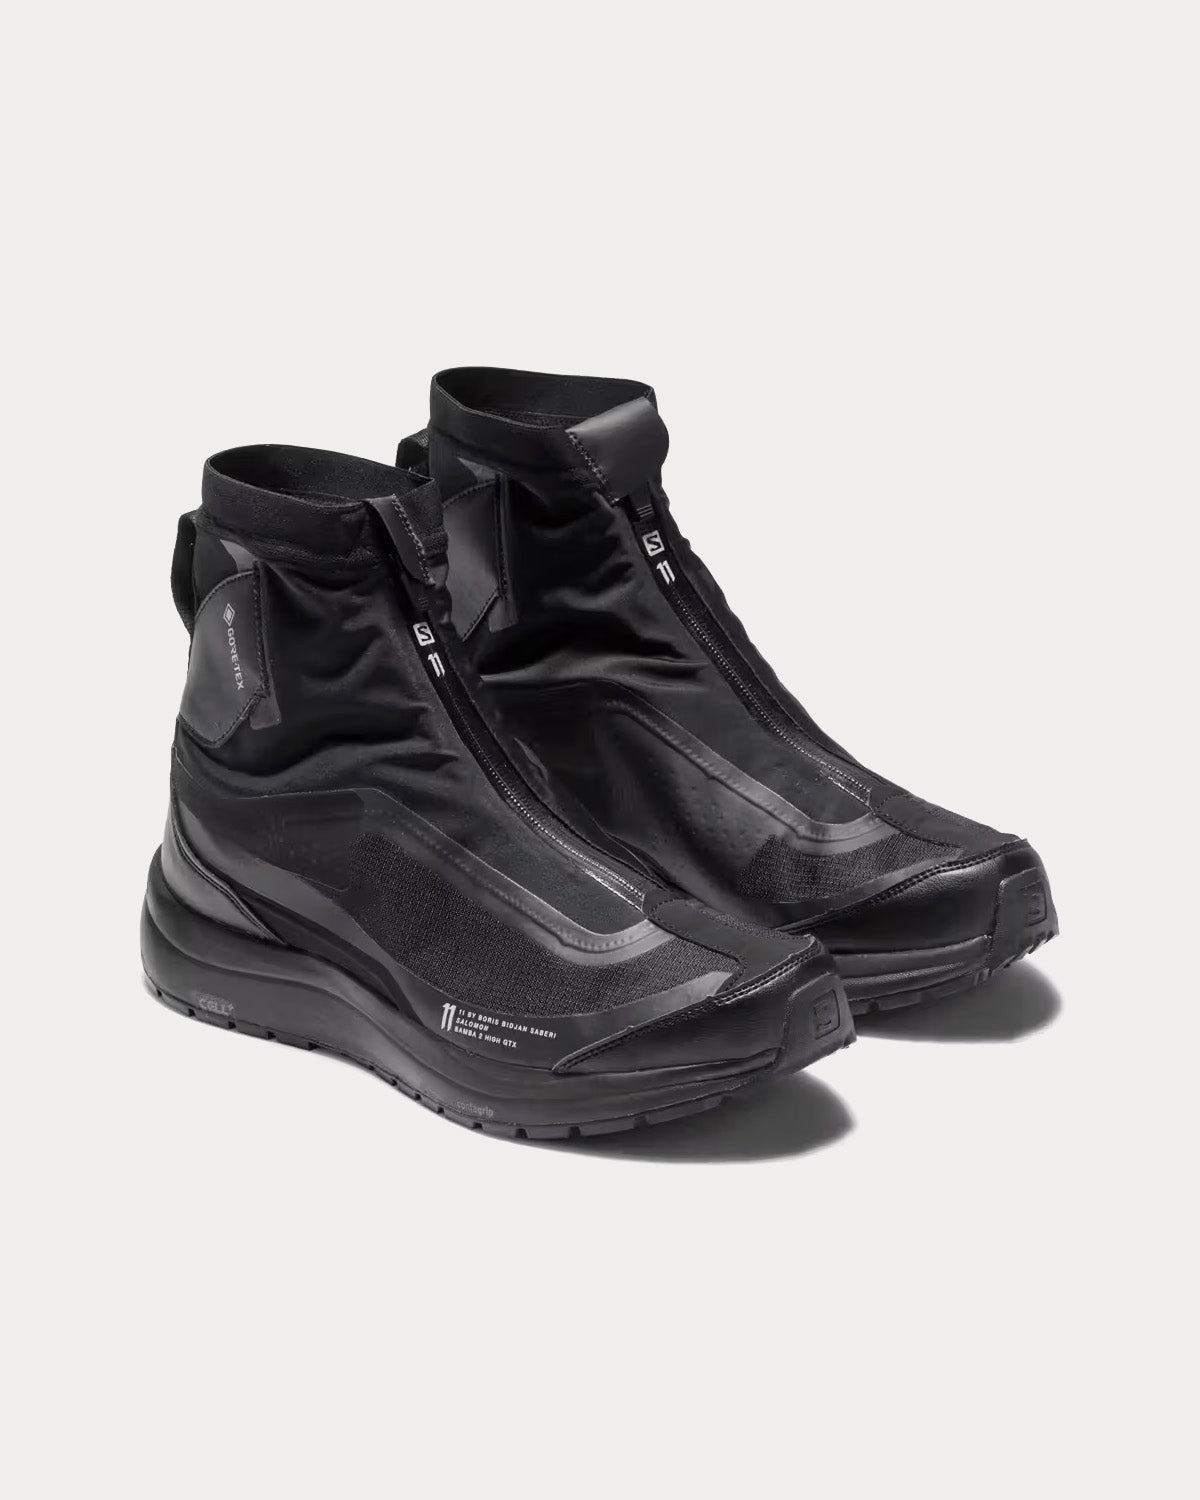 Salomon x 11 By Boris Bidjan Saberi - Bamba 2 GTX Black High Top Sneakers